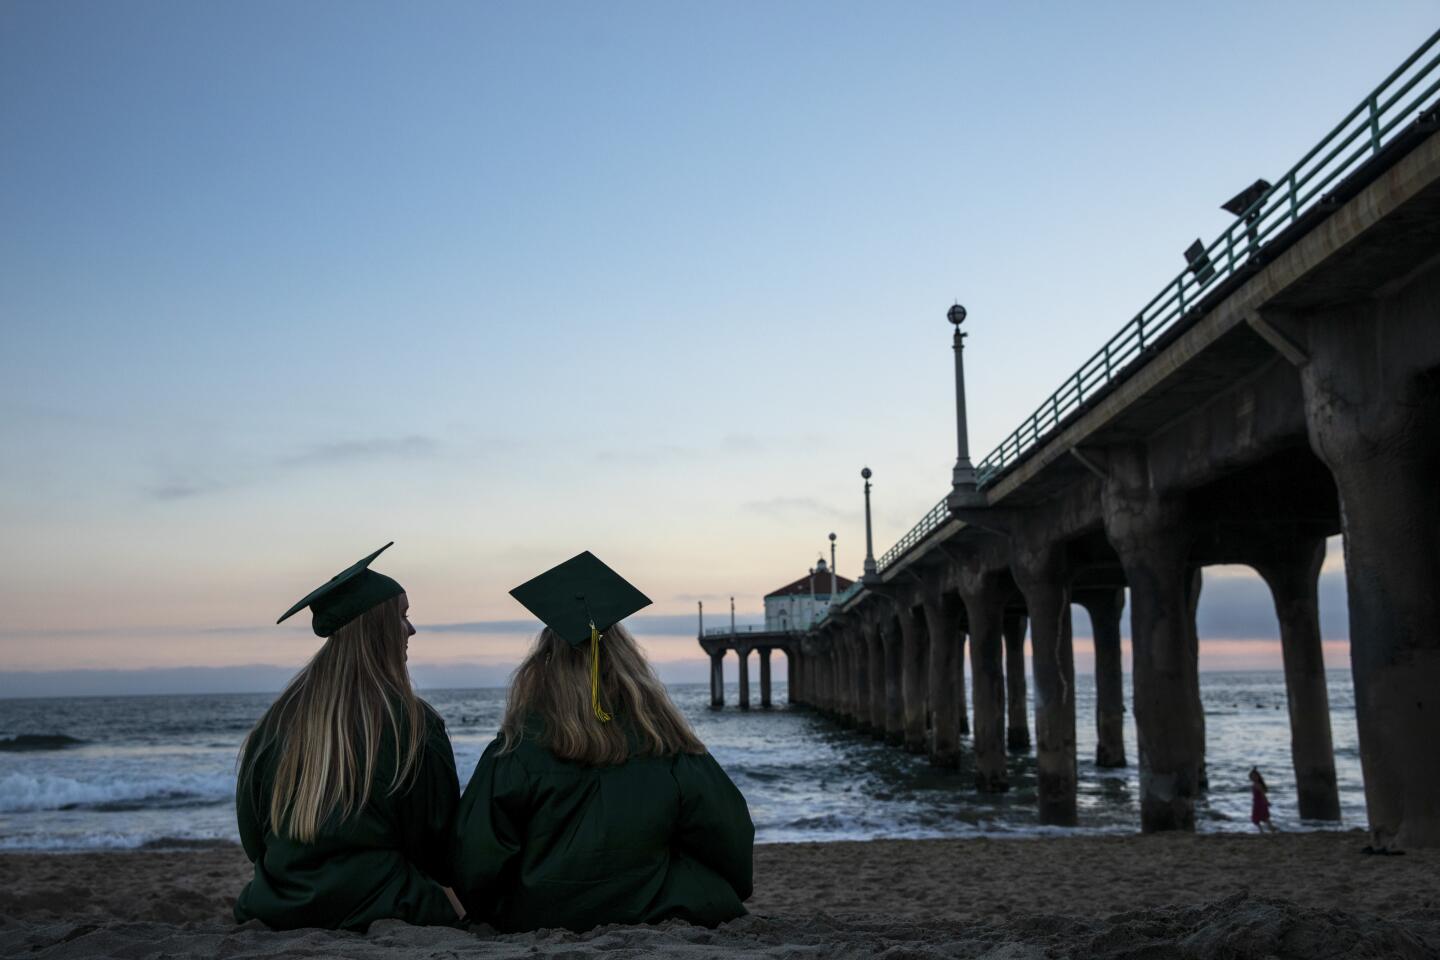 Cameron Johnson,18, left, and Simona Krasnegor,17, watched the sun set while sitting next to the Manhattan Beach Pier.